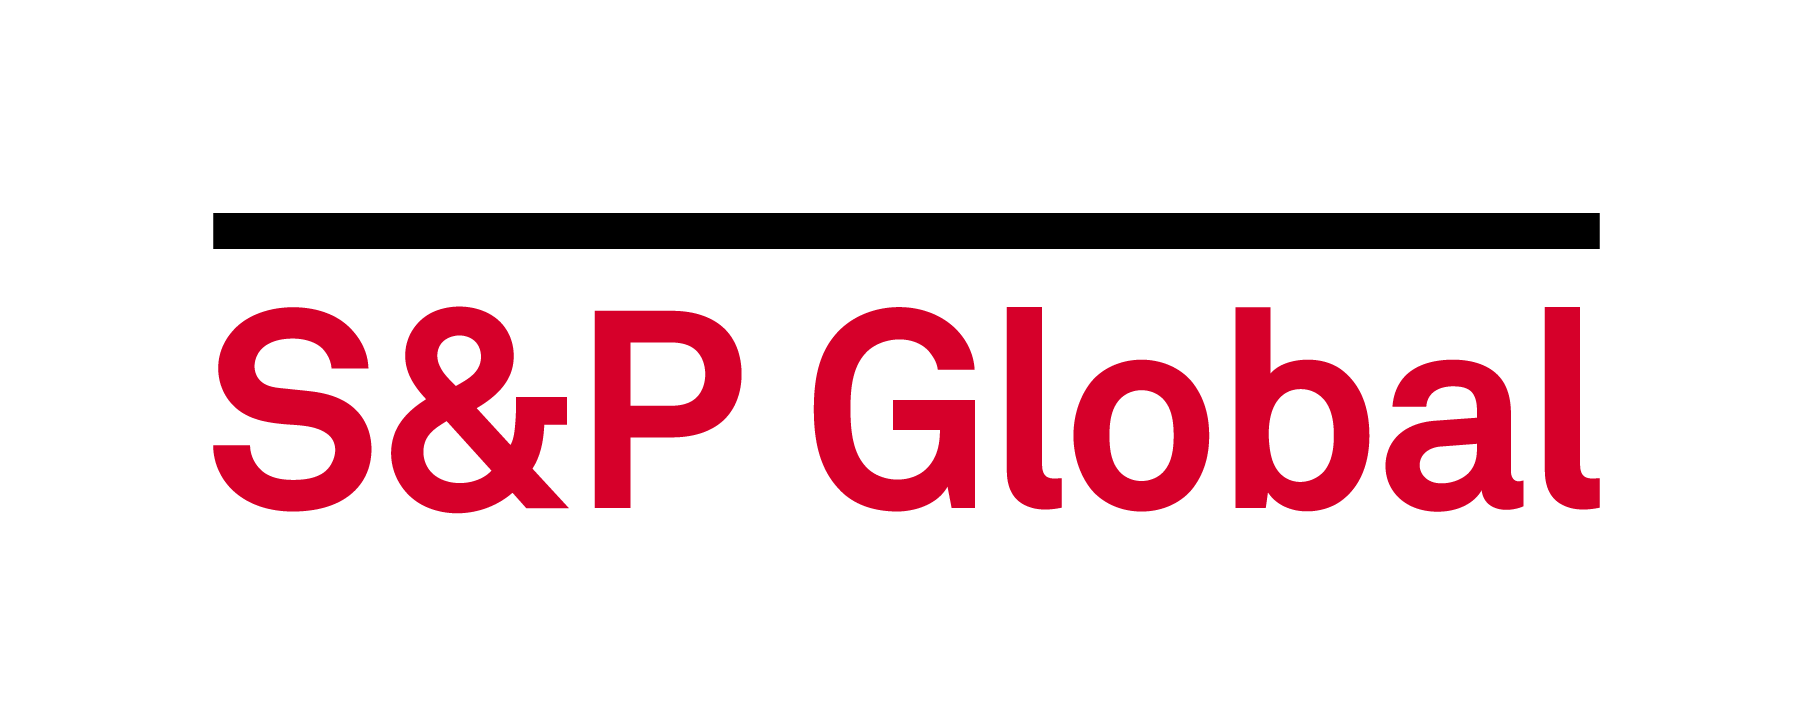 S&P Global, Inc. | Logopedia | FANDOM powered by Wikia